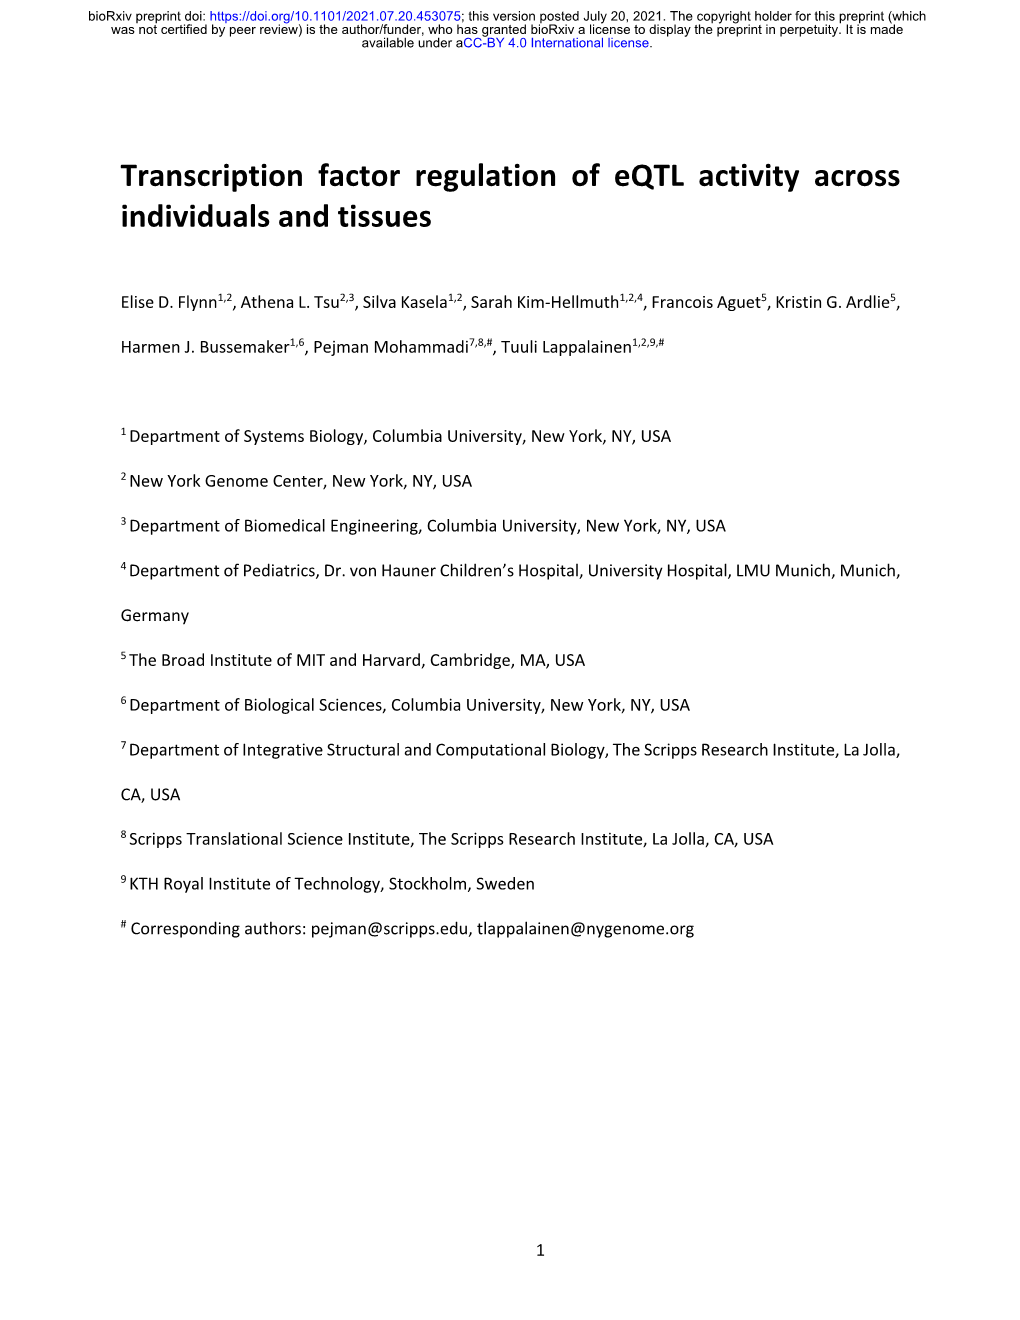 Transcription Factor Regulation of Eqtl Activity Across Individuals and Tissues